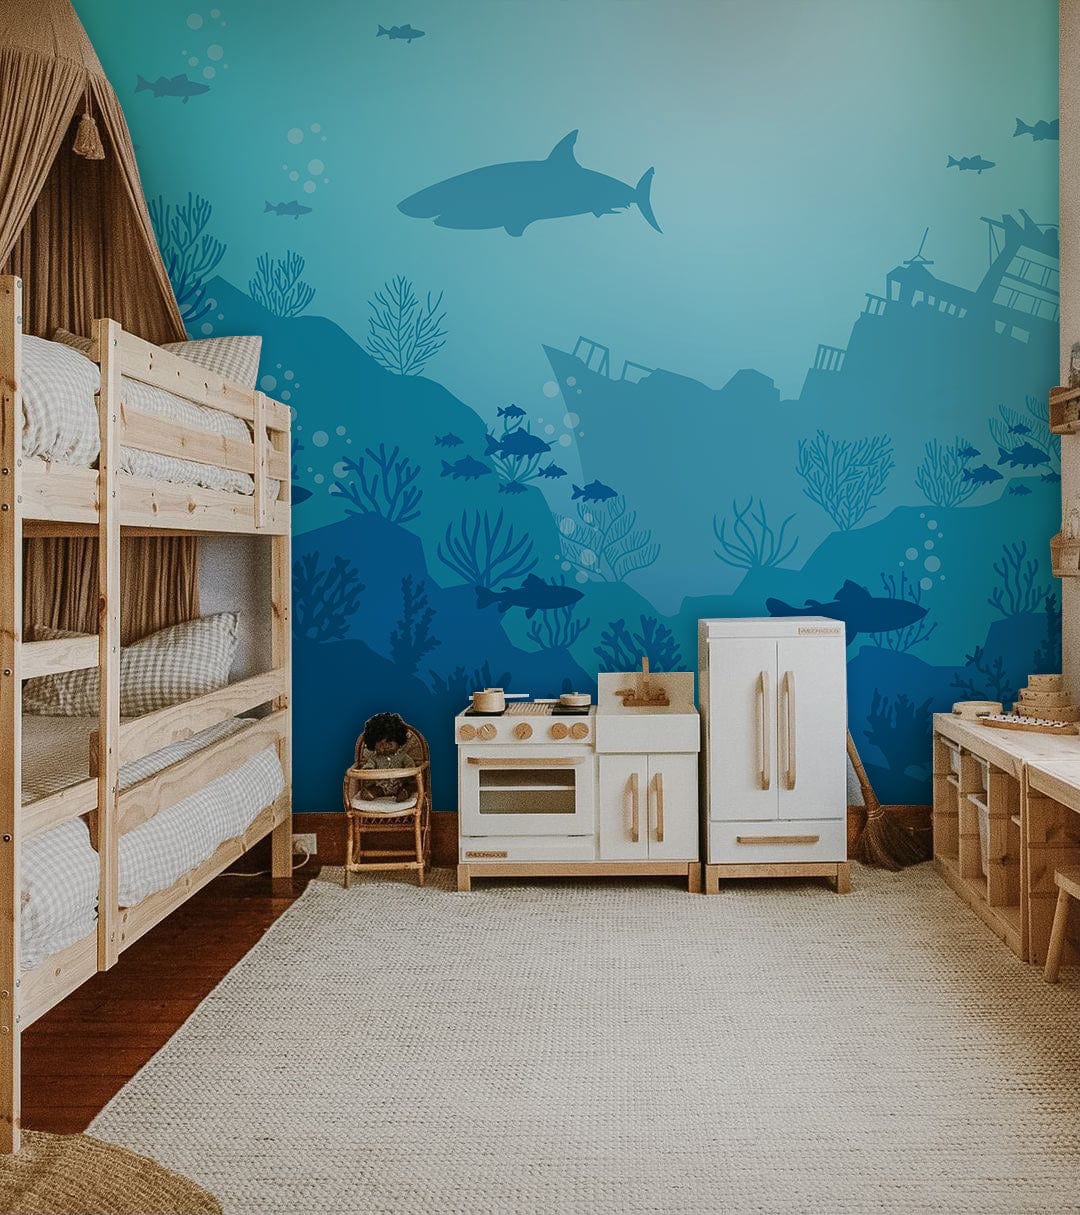 a blue ocean globe cartoon wallpaper designed just for a child's bedroom